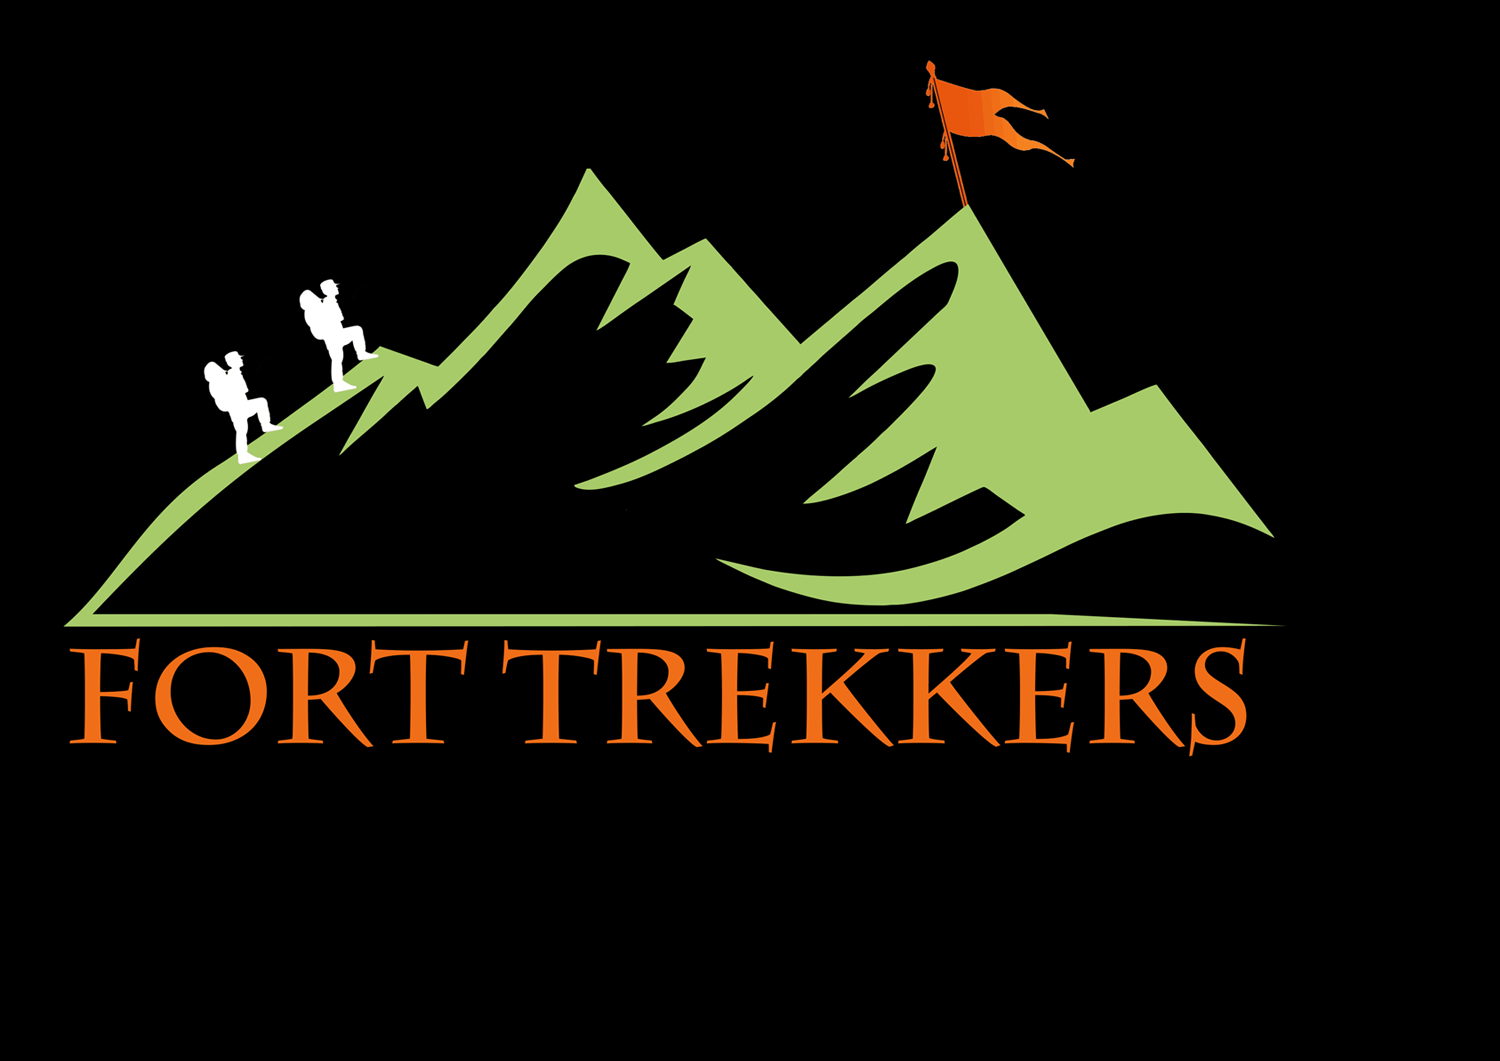 Fort Trekkers